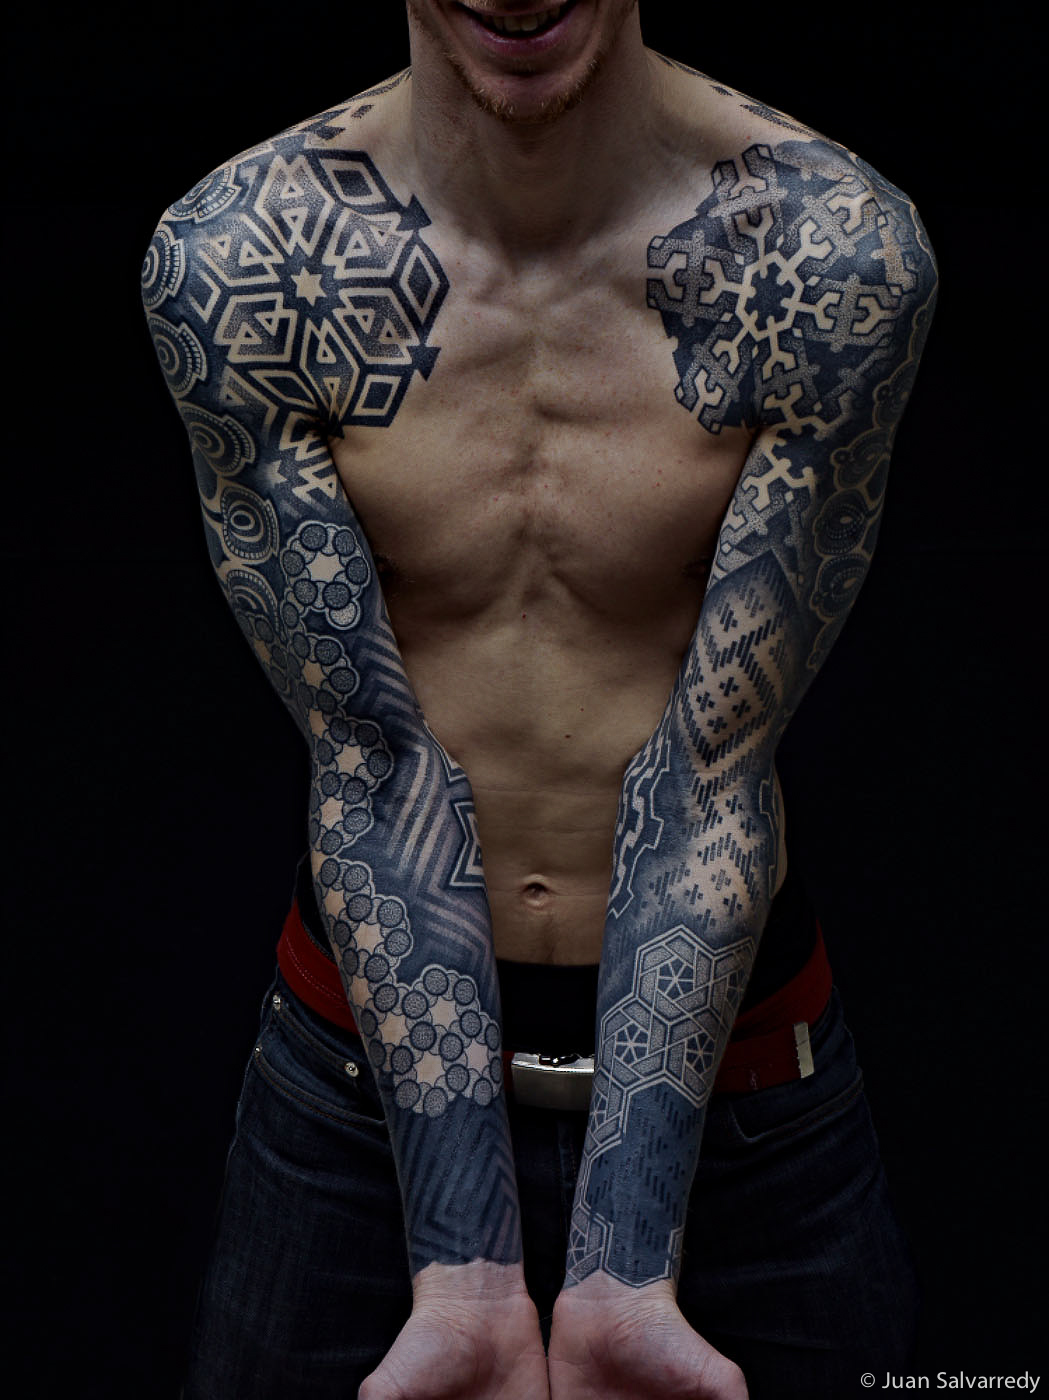 Arm Tattoos For Men - Arm+Tattoos+For+Men1884